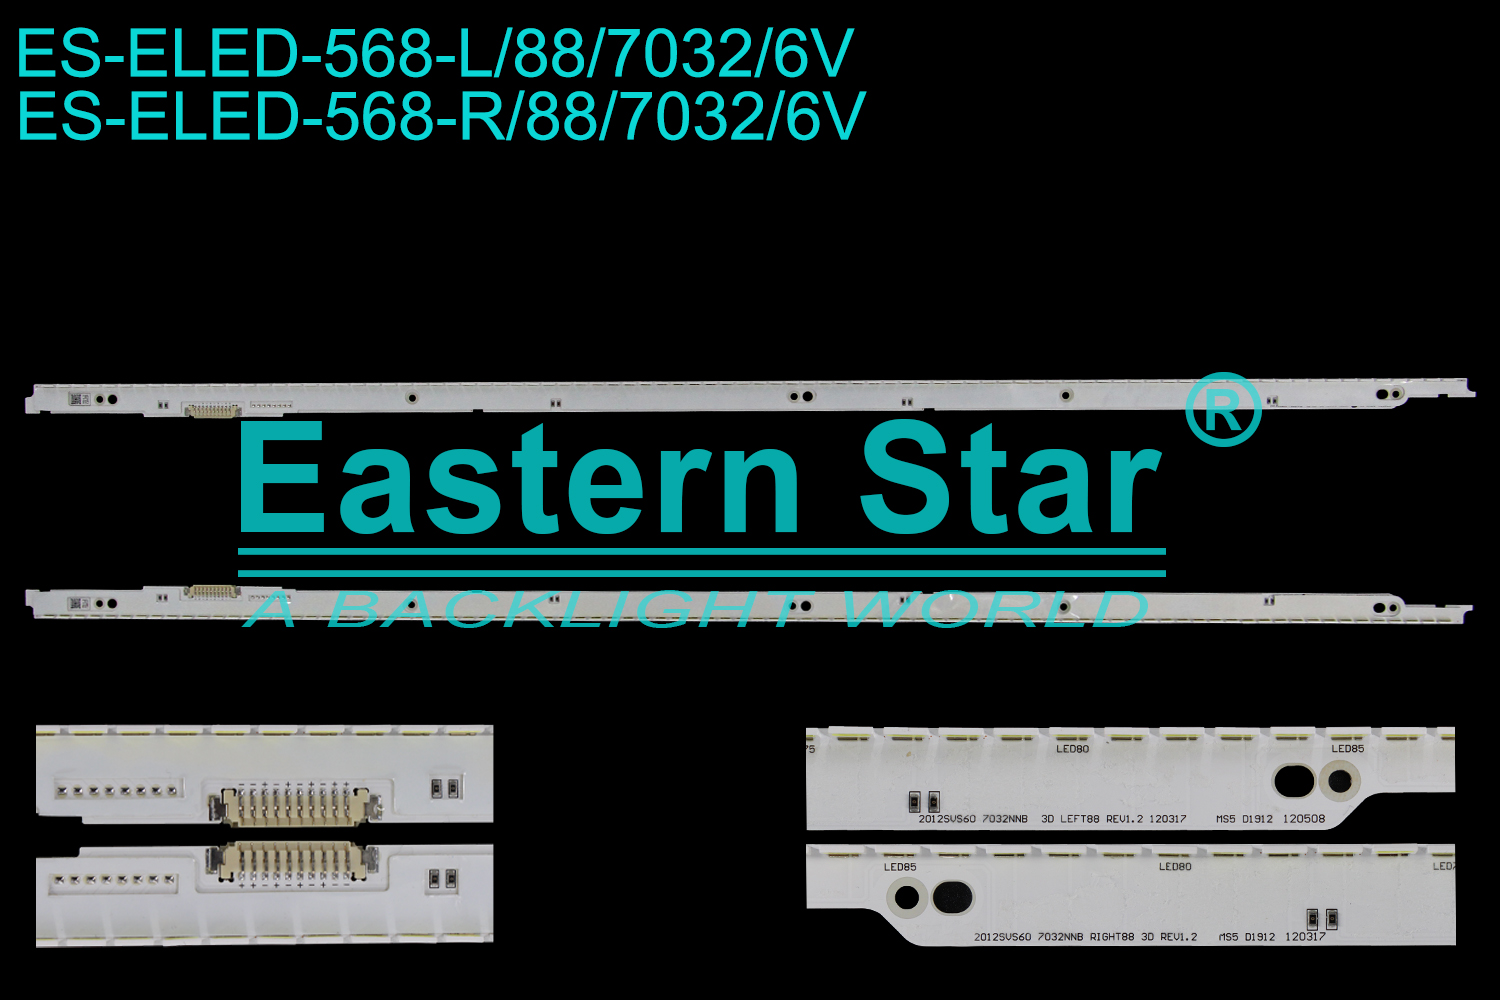 ES-ELED-568 ELED/EDGE TV backlight use for 60'' Samsung UN60ES6003FXZA UN60ES6100FXZA SAMSUNG 2012SVS60 7032NNB 3D LEFT88 /RIGHT88 REV1.2 120317 LED STRIPS(2)